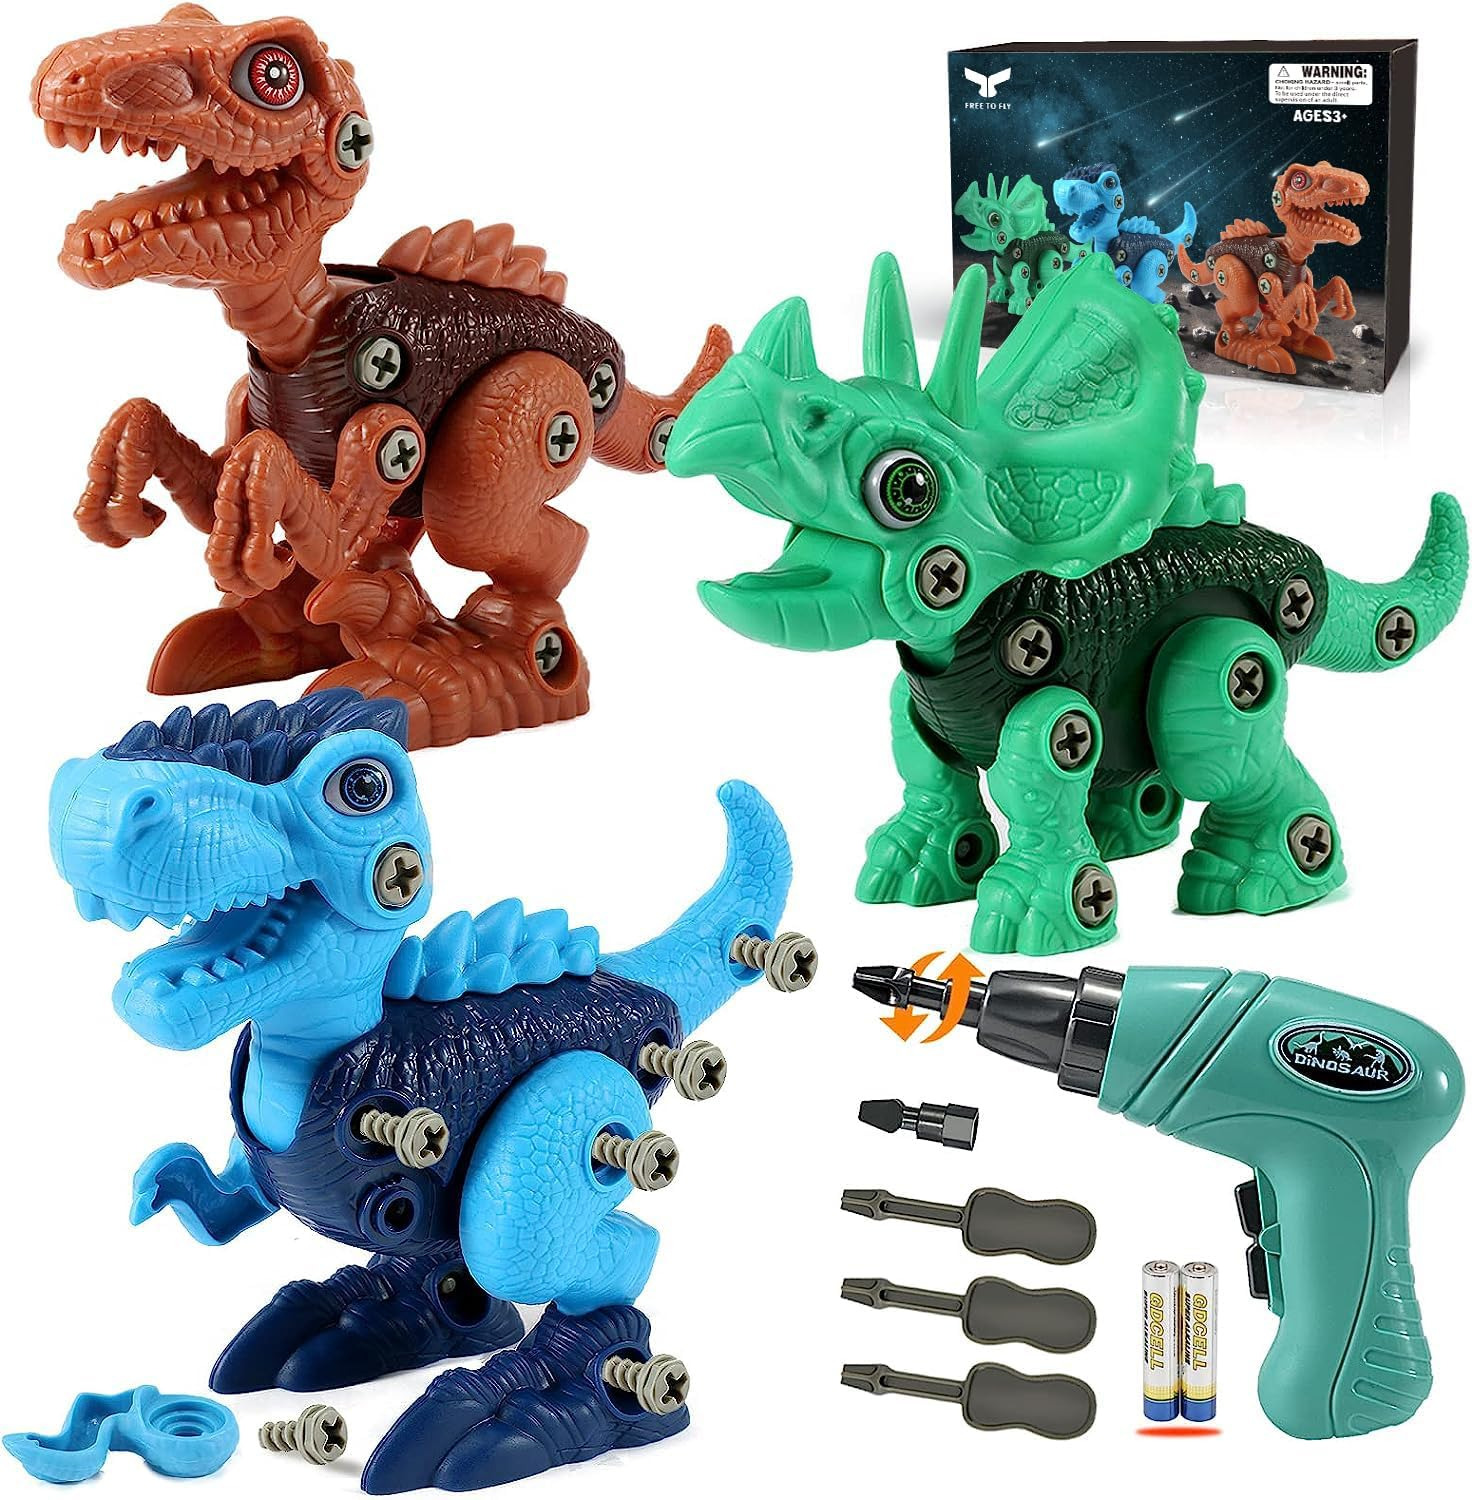 Kids Toys Stem Dinosaur Toy: Take Apart Dinosaur Toys for Kids 3-5| Learning Edu